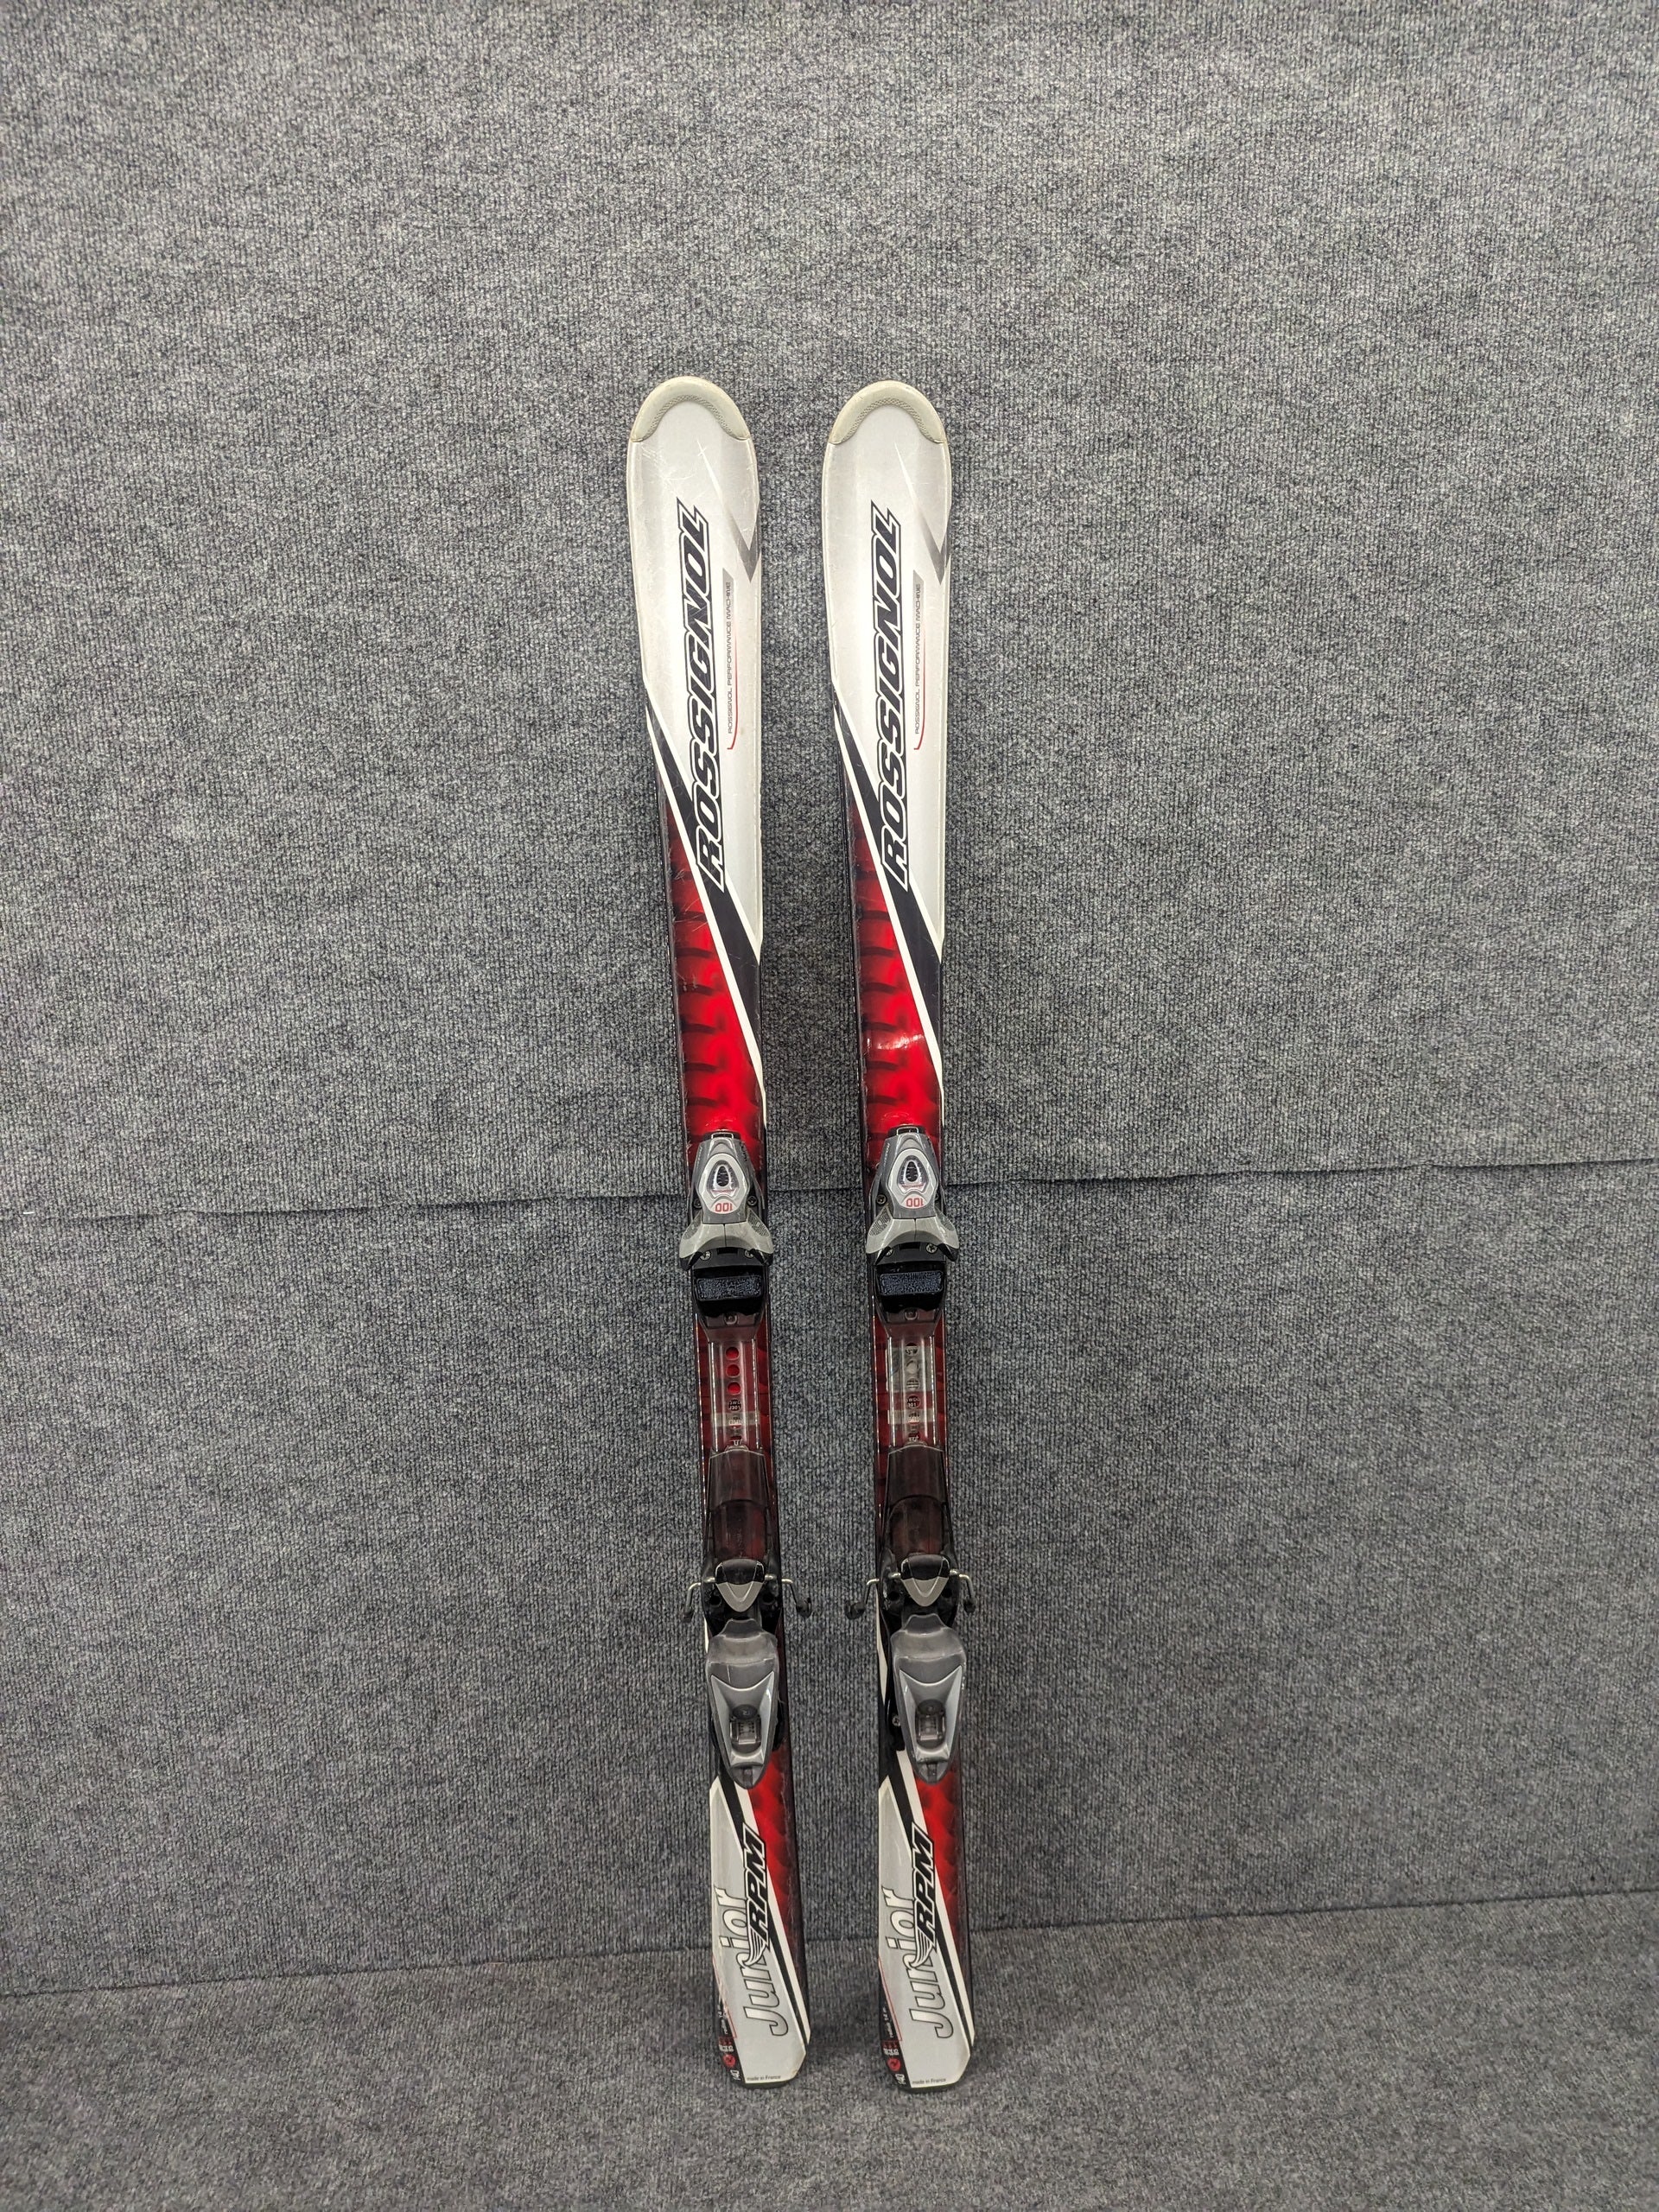 Rossignol Length 140 Cm/55 Alpine Skis